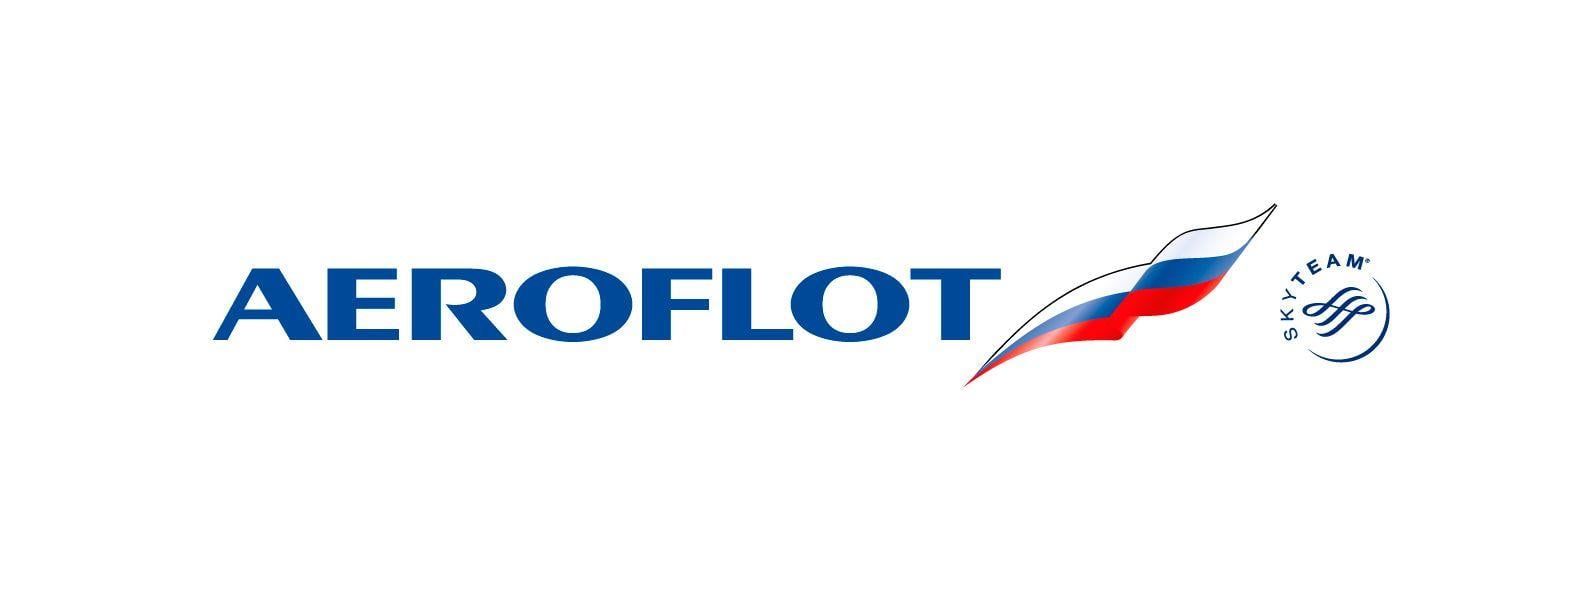 Russia Airline Logo - Aeroflot Logo PNG Transparent Aeroflot Logo.PNG Images. | PlusPNG